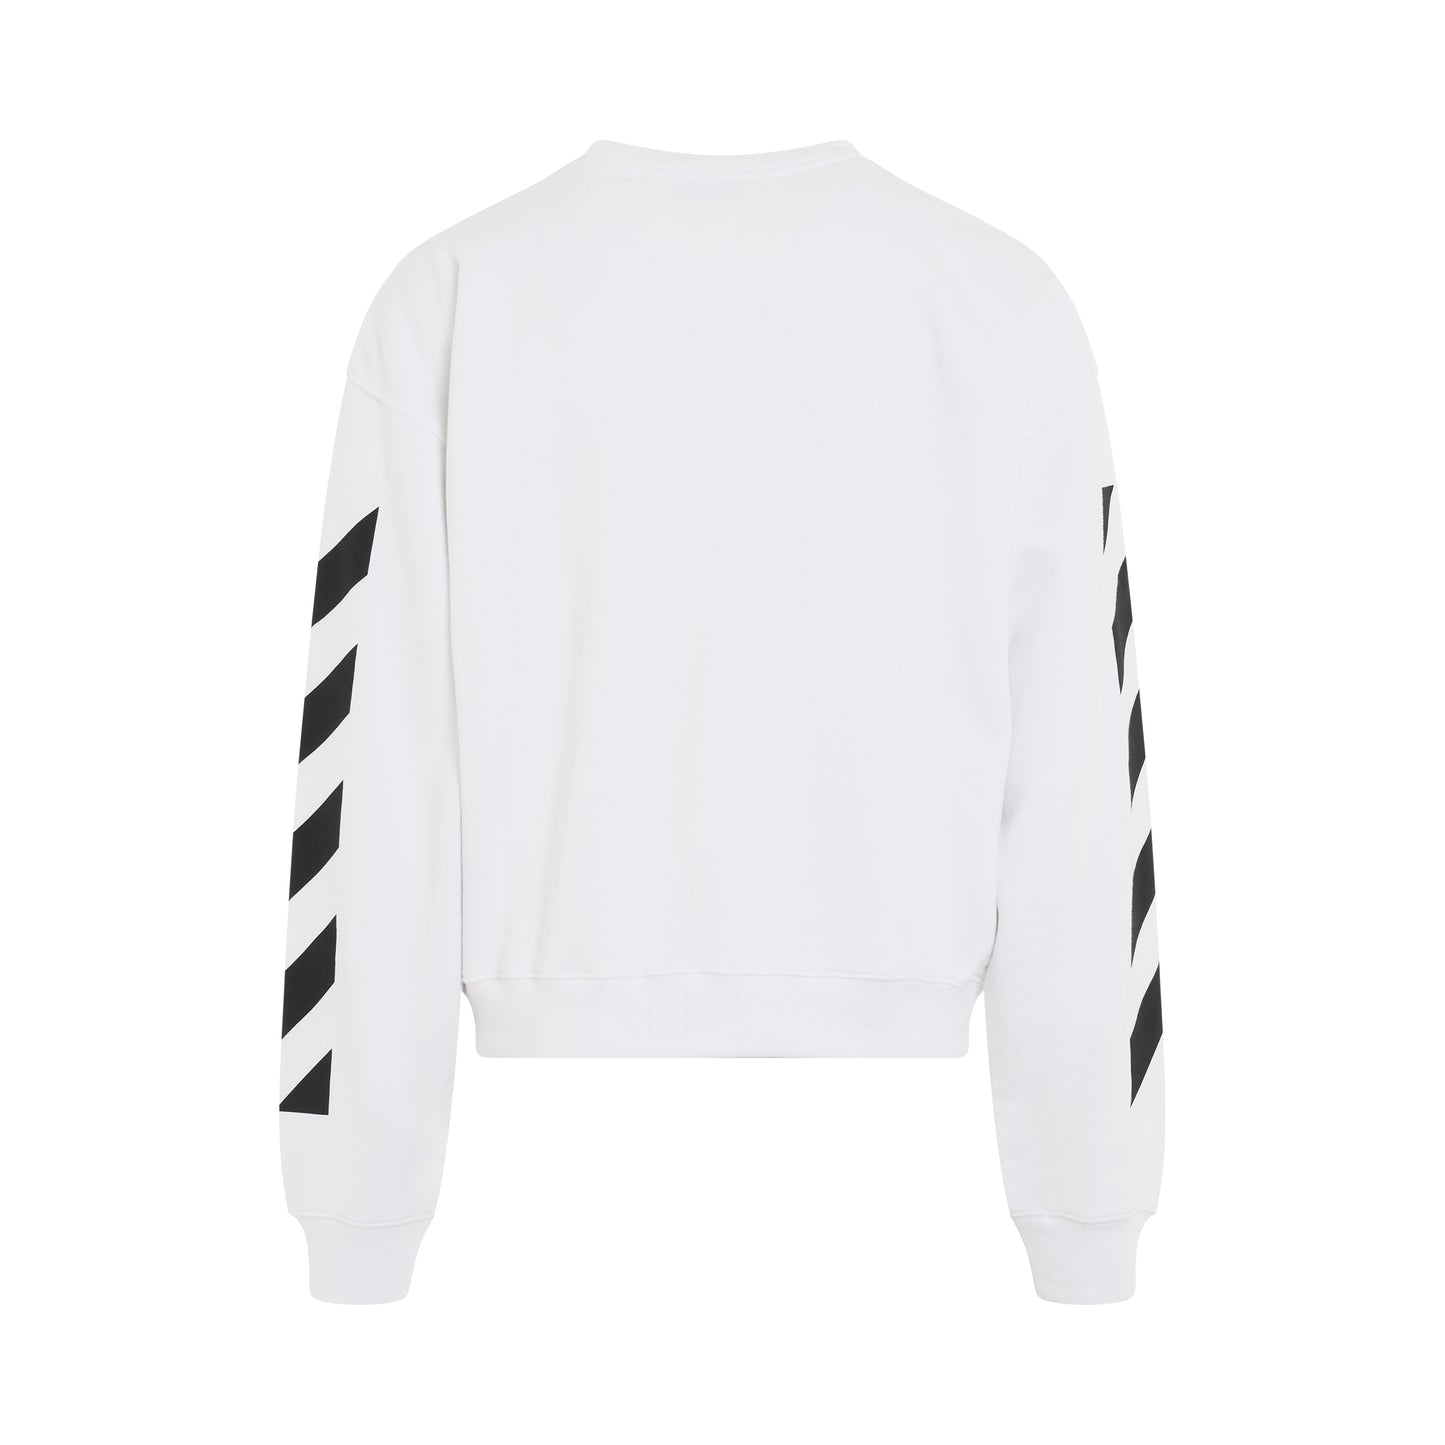 Diagonal Helvetica Oversize Crewneck Sweatshirt in White/Black